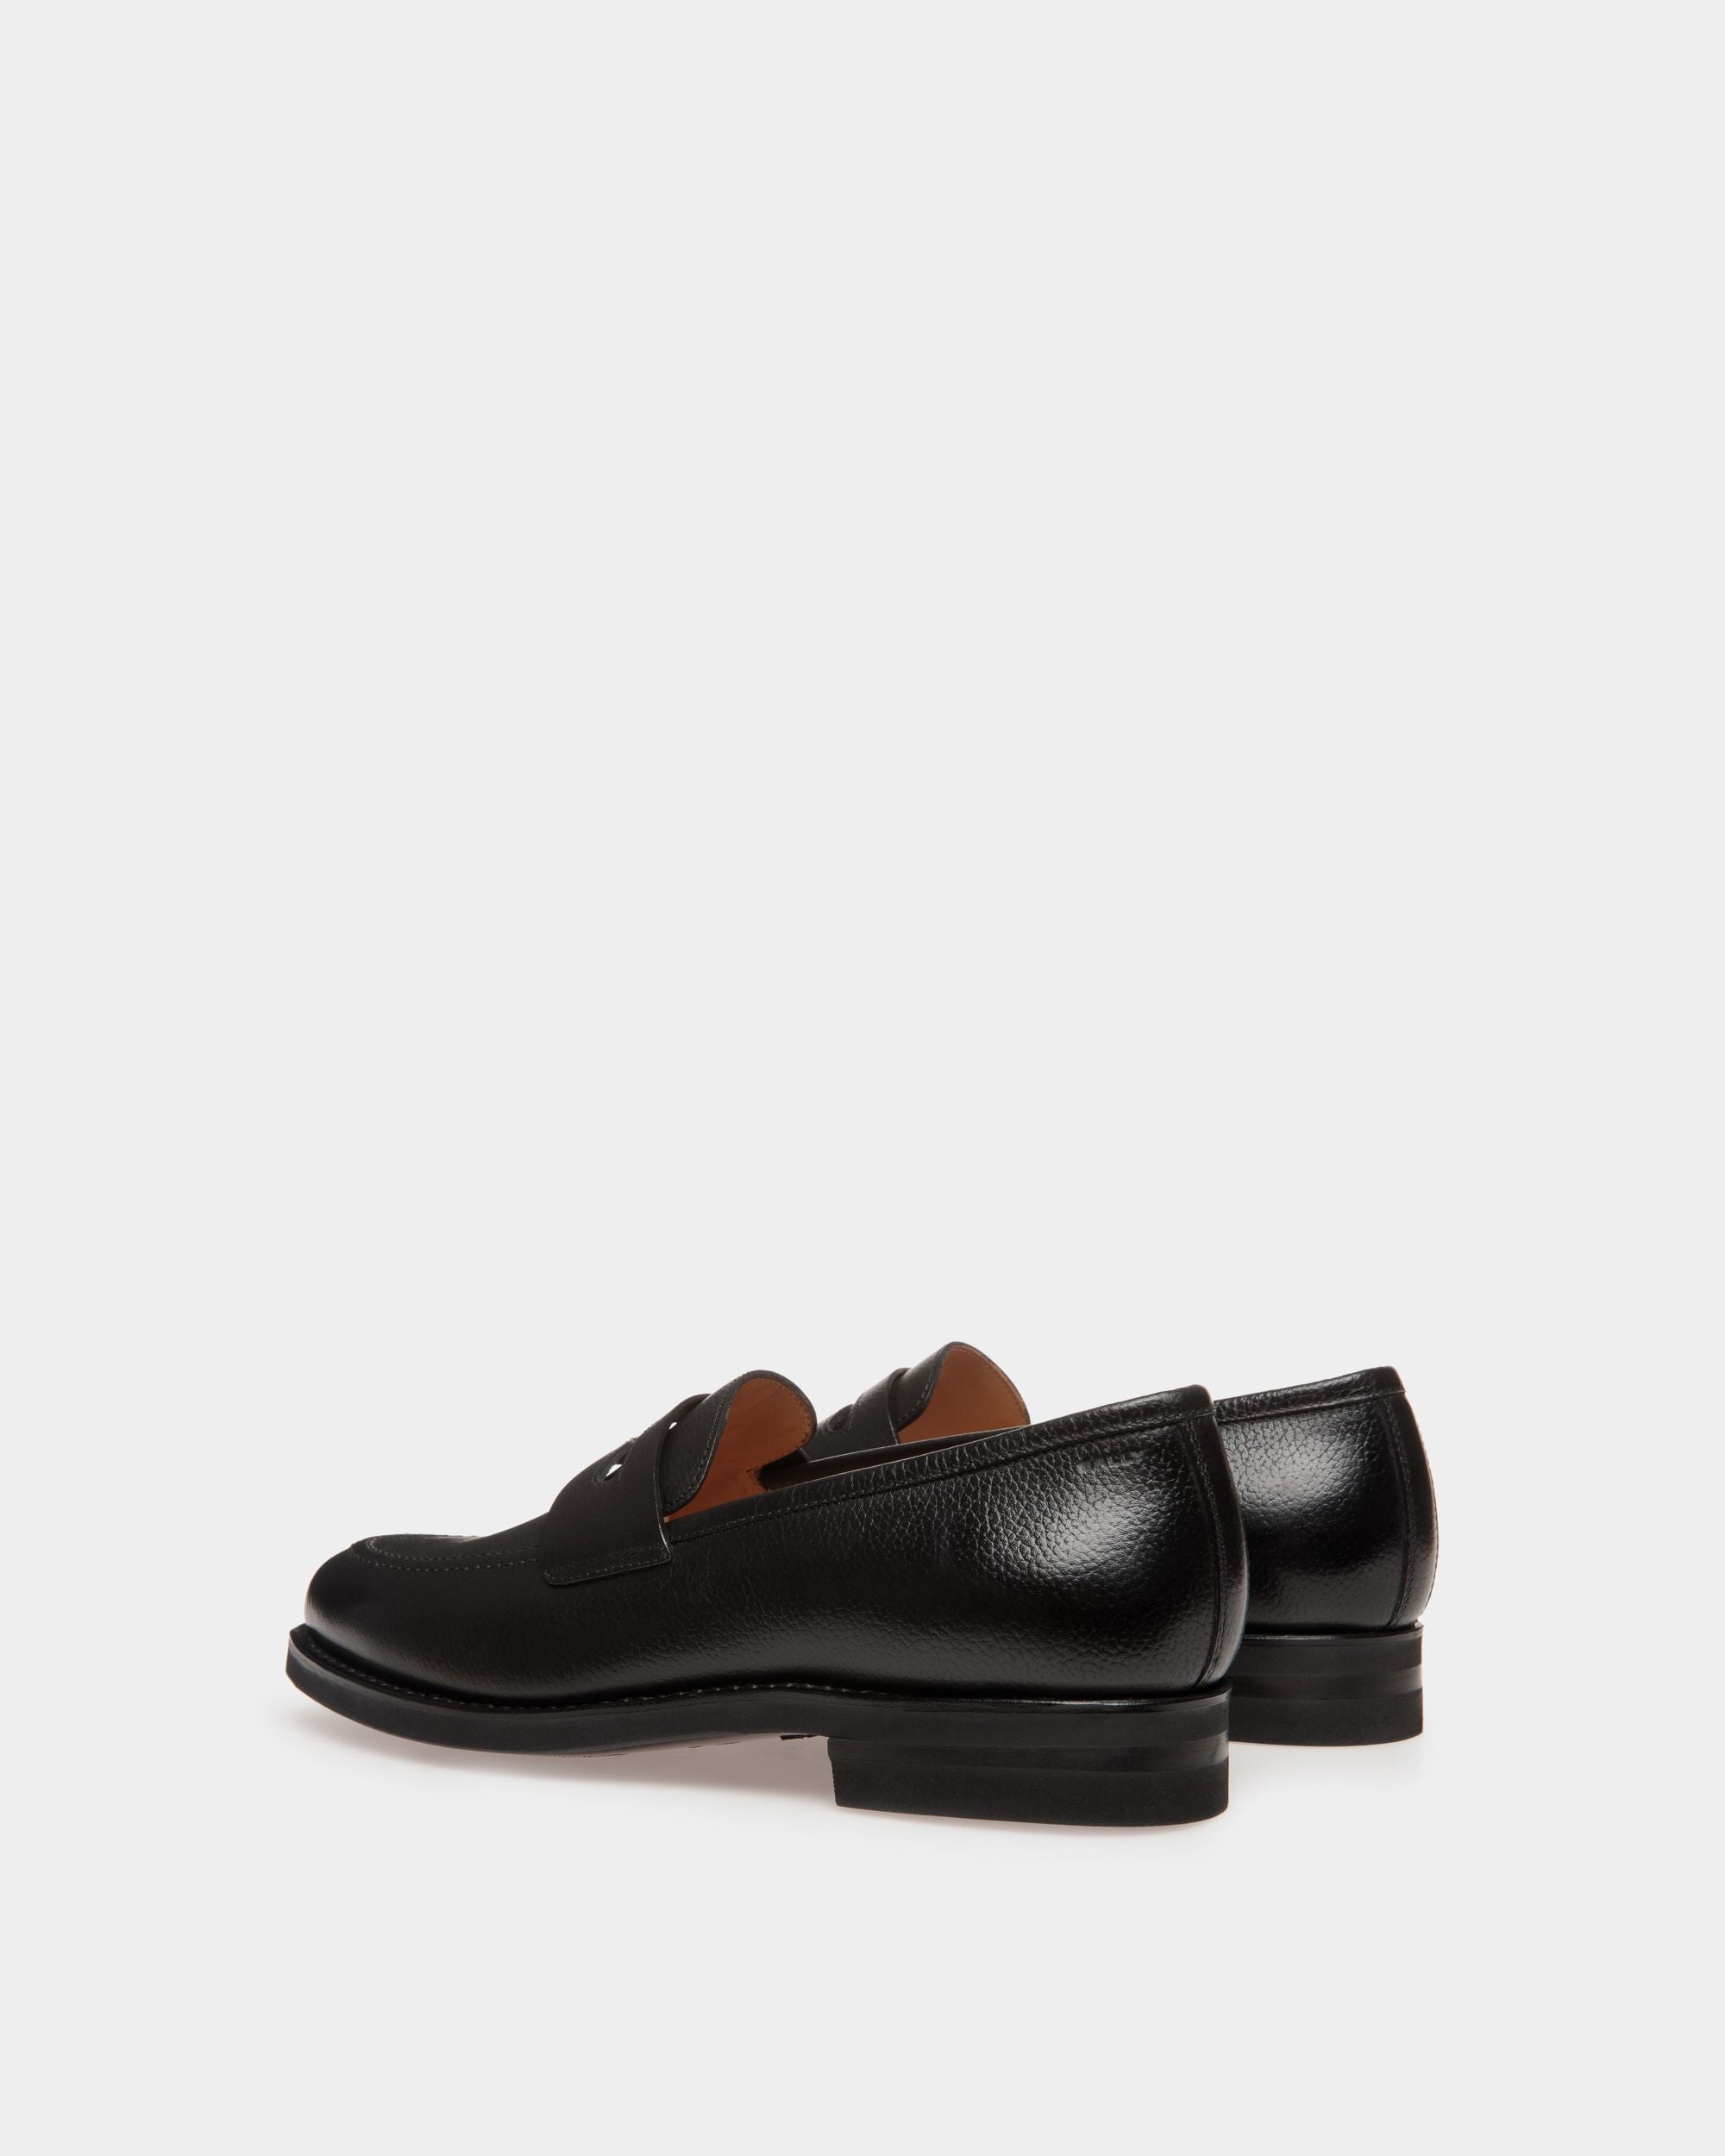 Schoenen Loafer in Embossed Leather